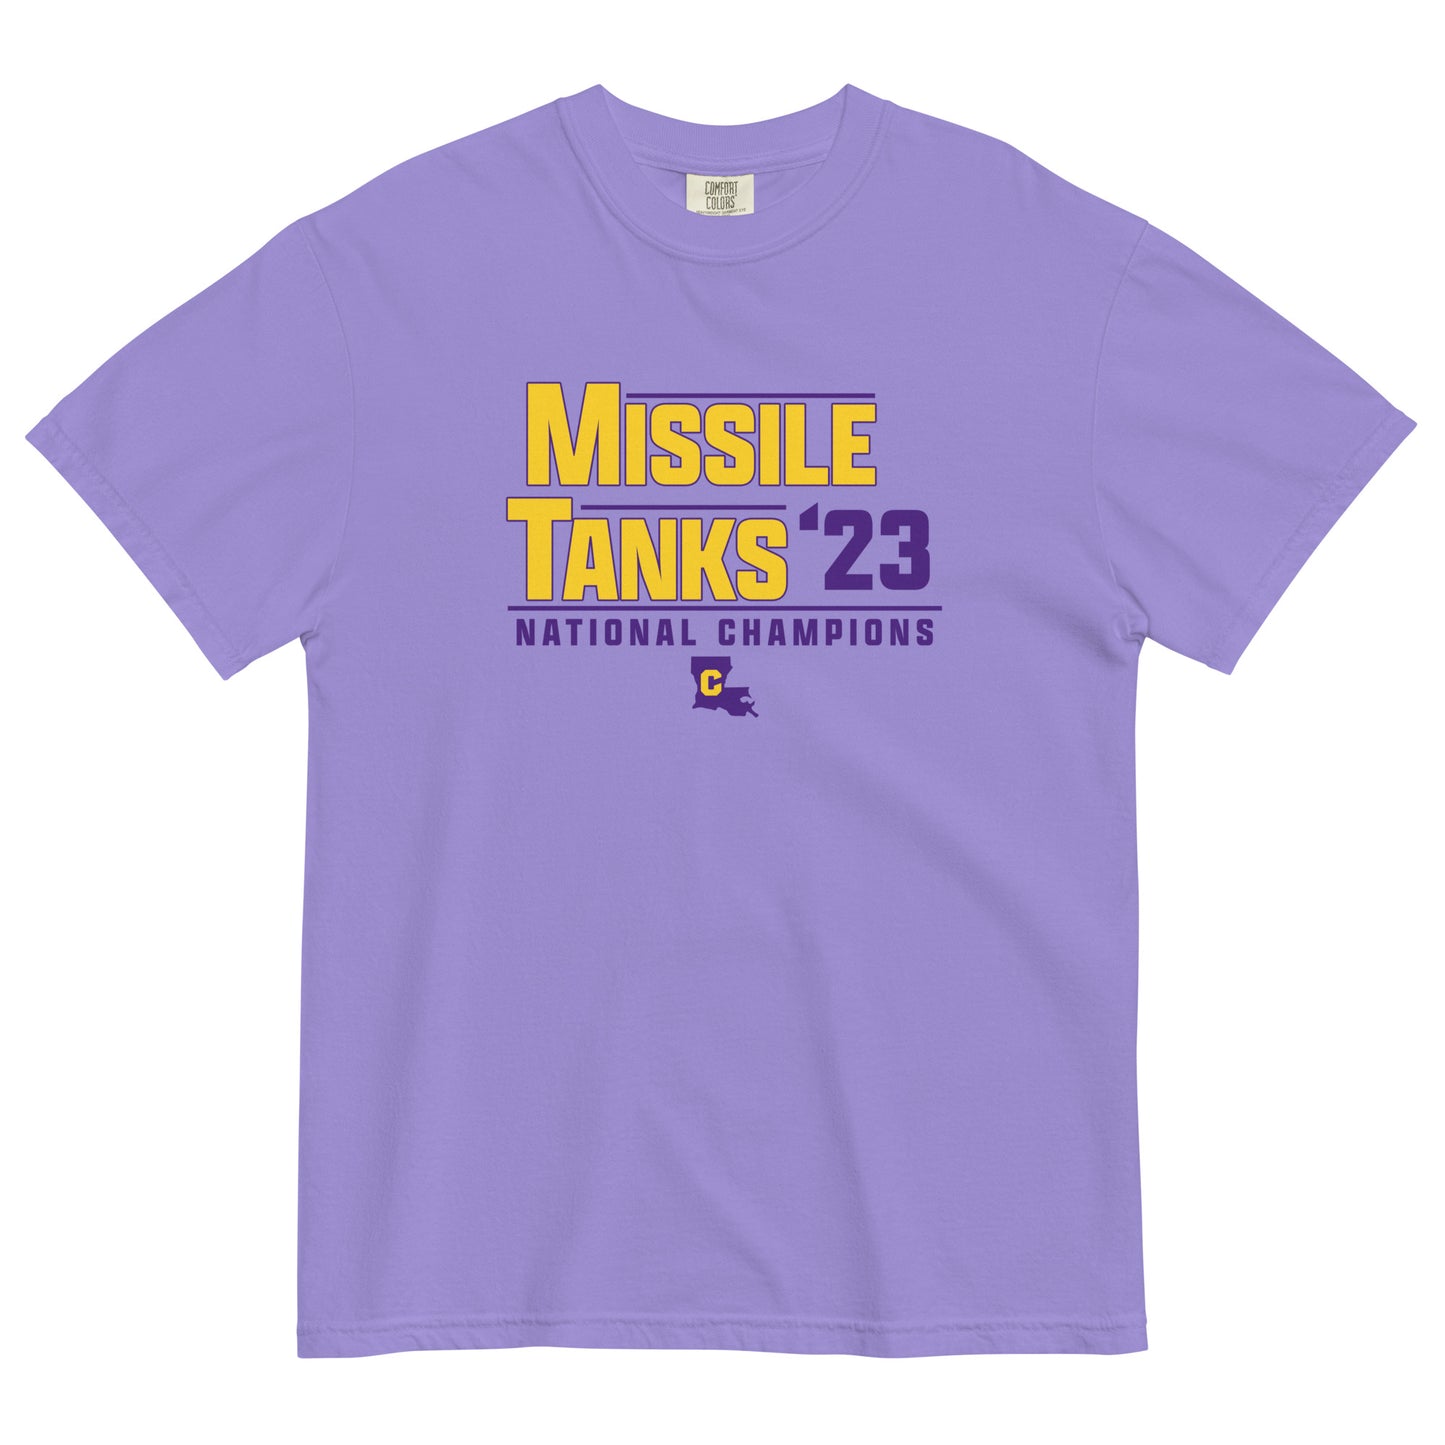 Missile Tanks 23 Men’s garment-dyed heavyweight t-shirt